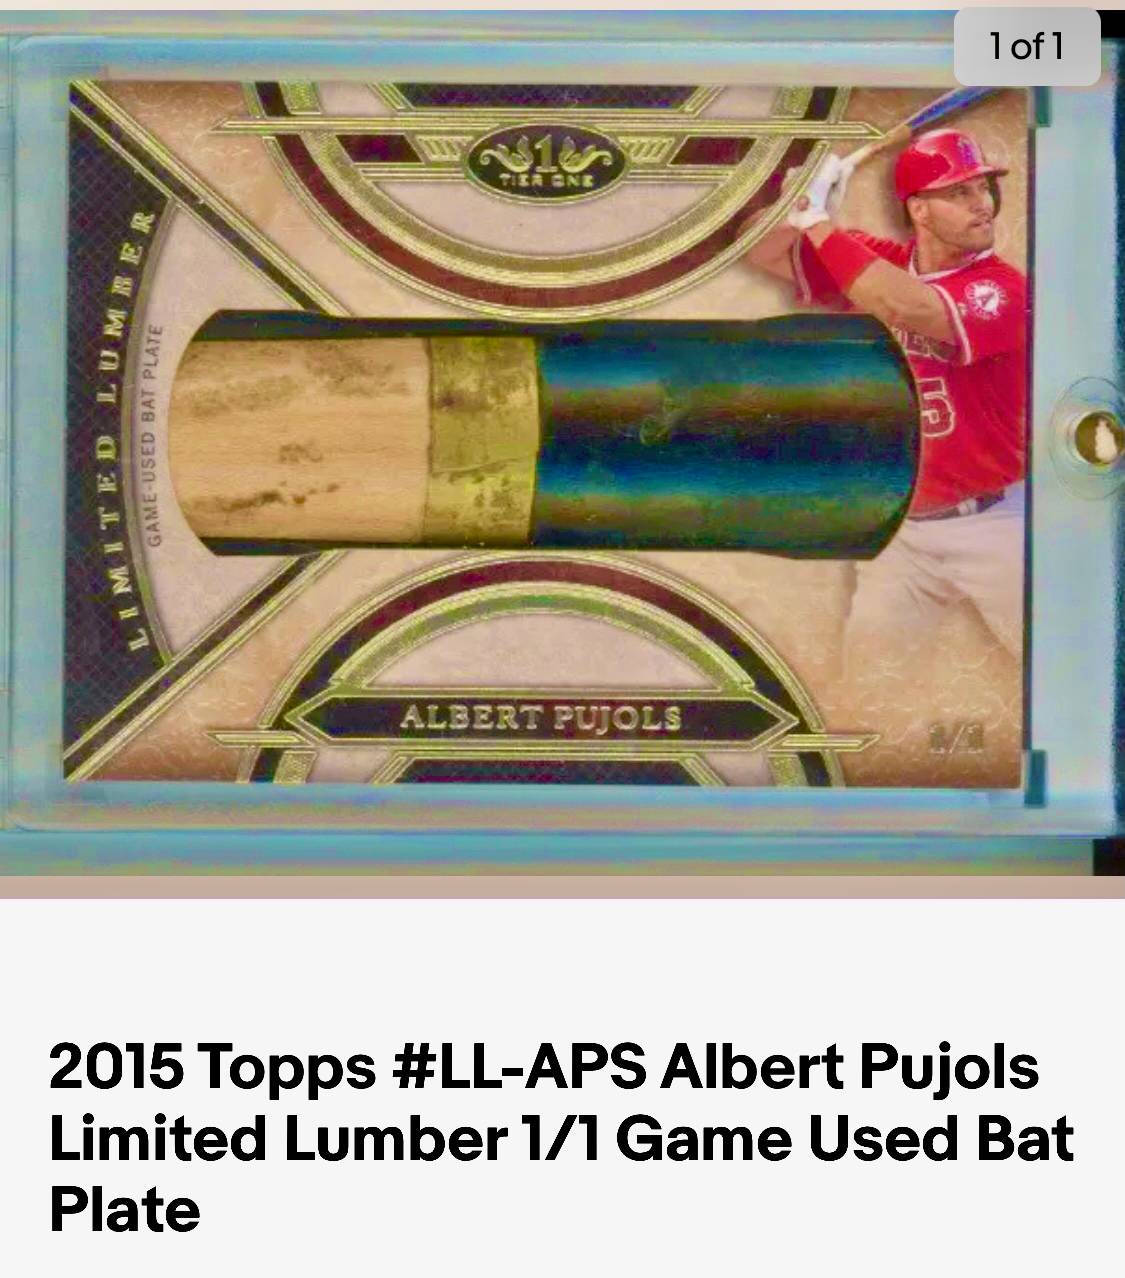 Albert Pujols 1/1 2015 Topps #LL-APS Limited Lumber Game Used Bat Plate